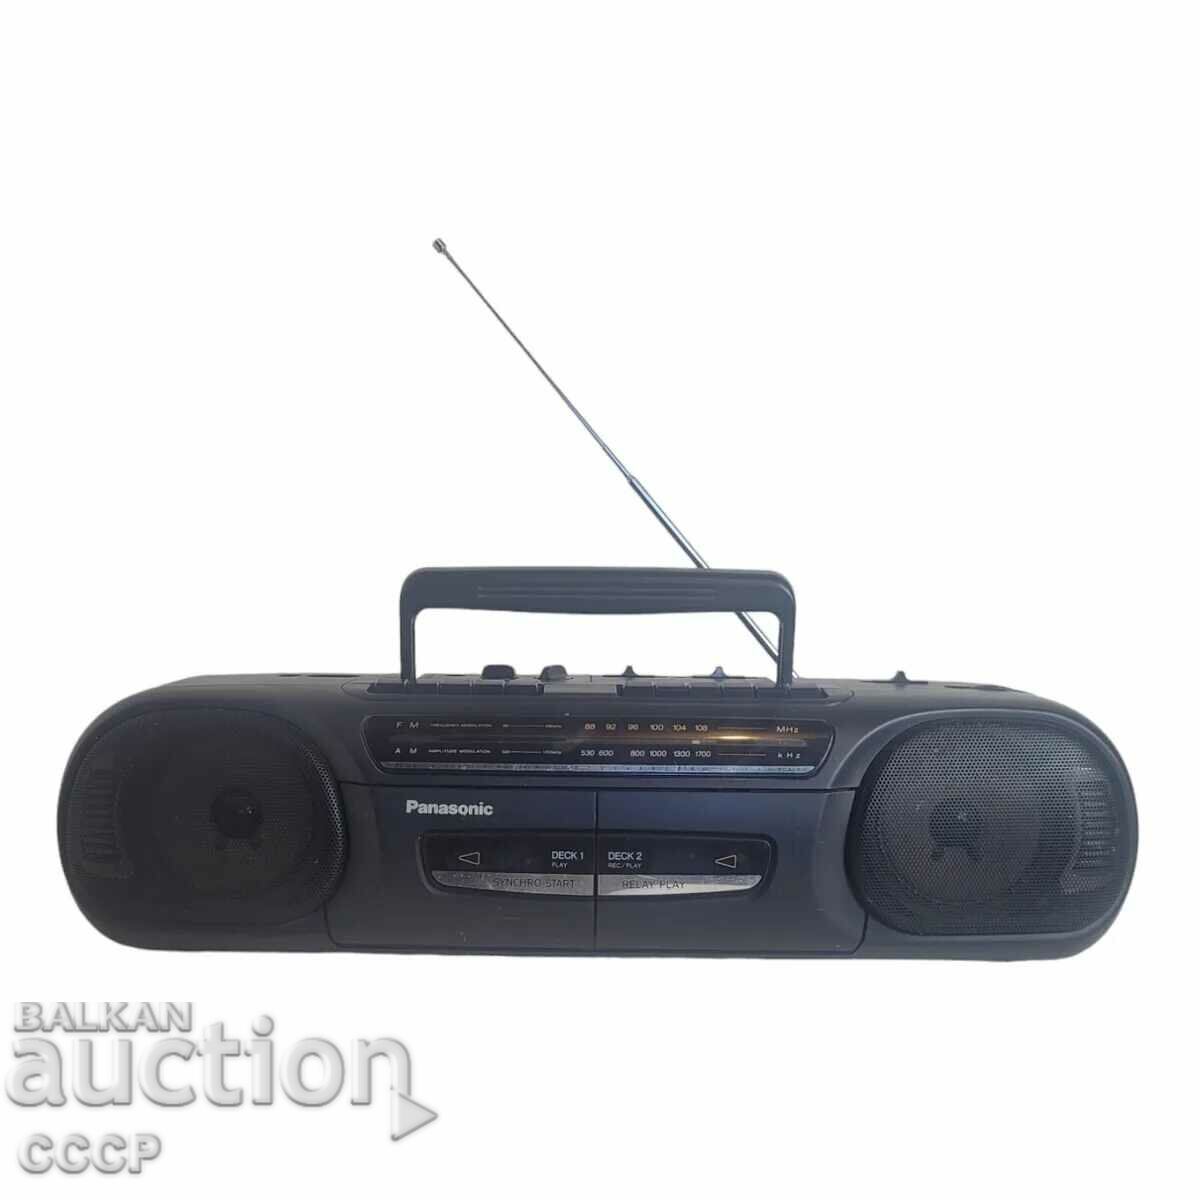 TOP Panasonic RX-FT530 Radio cassette player